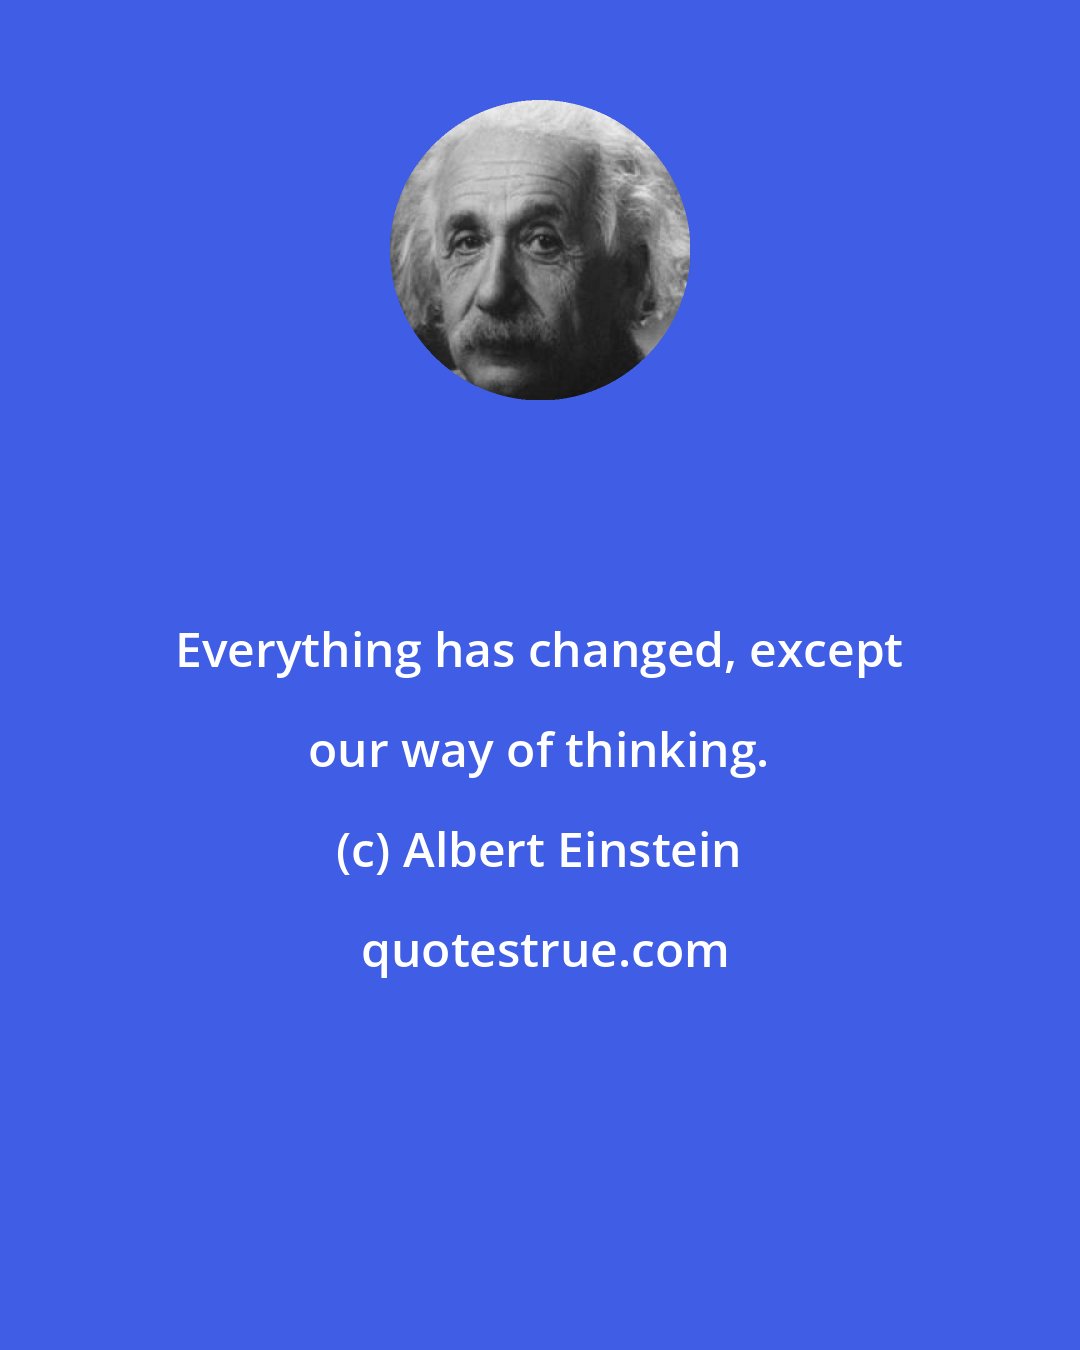 Albert Einstein: Everything has changed, except our way of thinking.